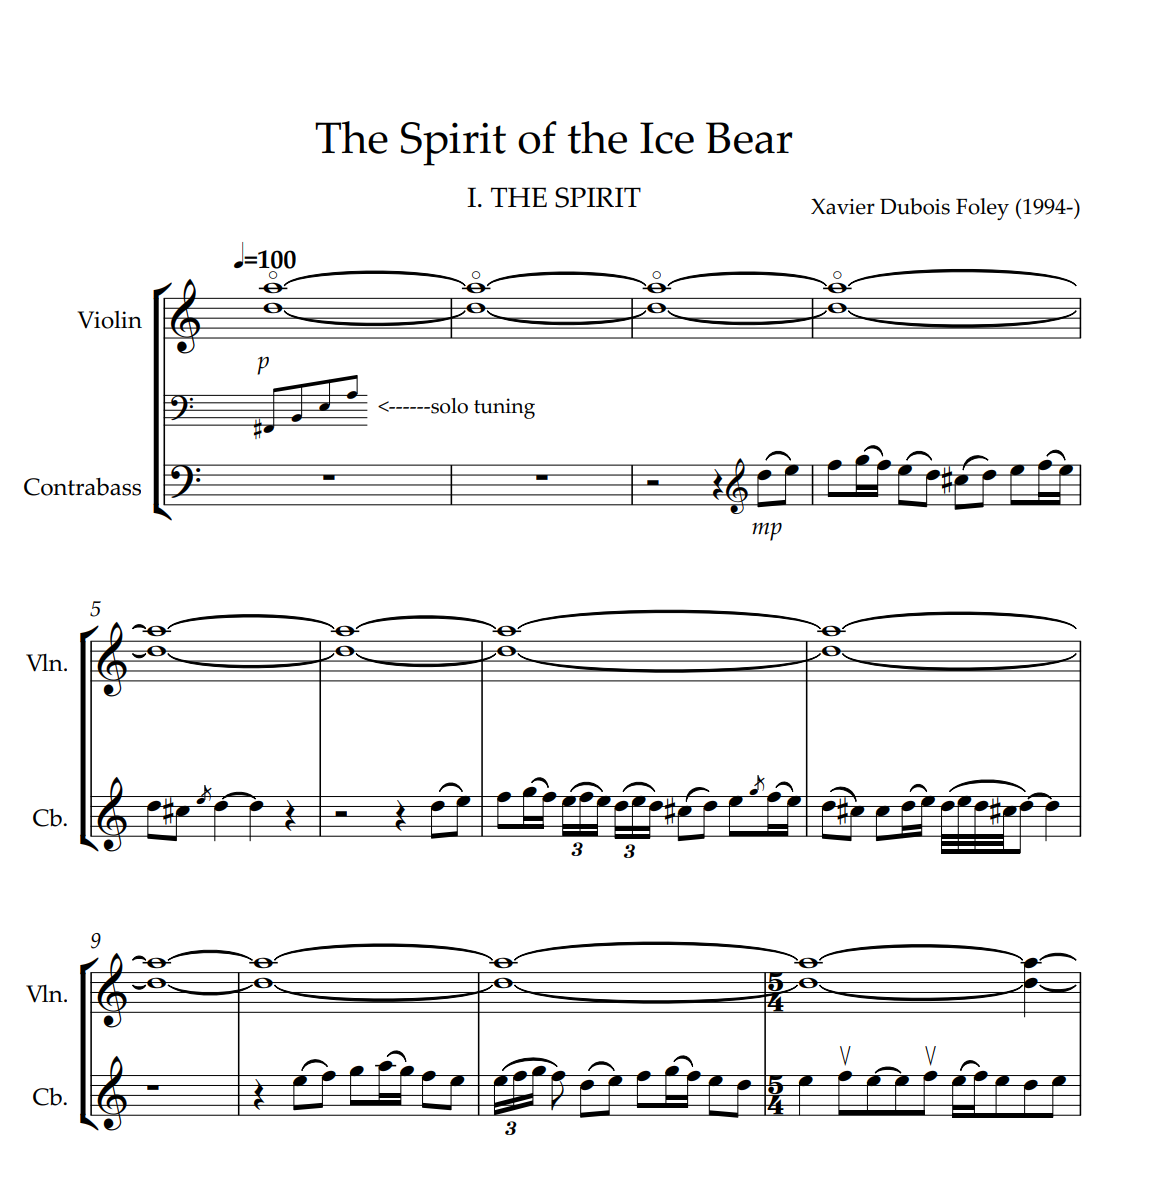 The Spirit of the Ice Bear